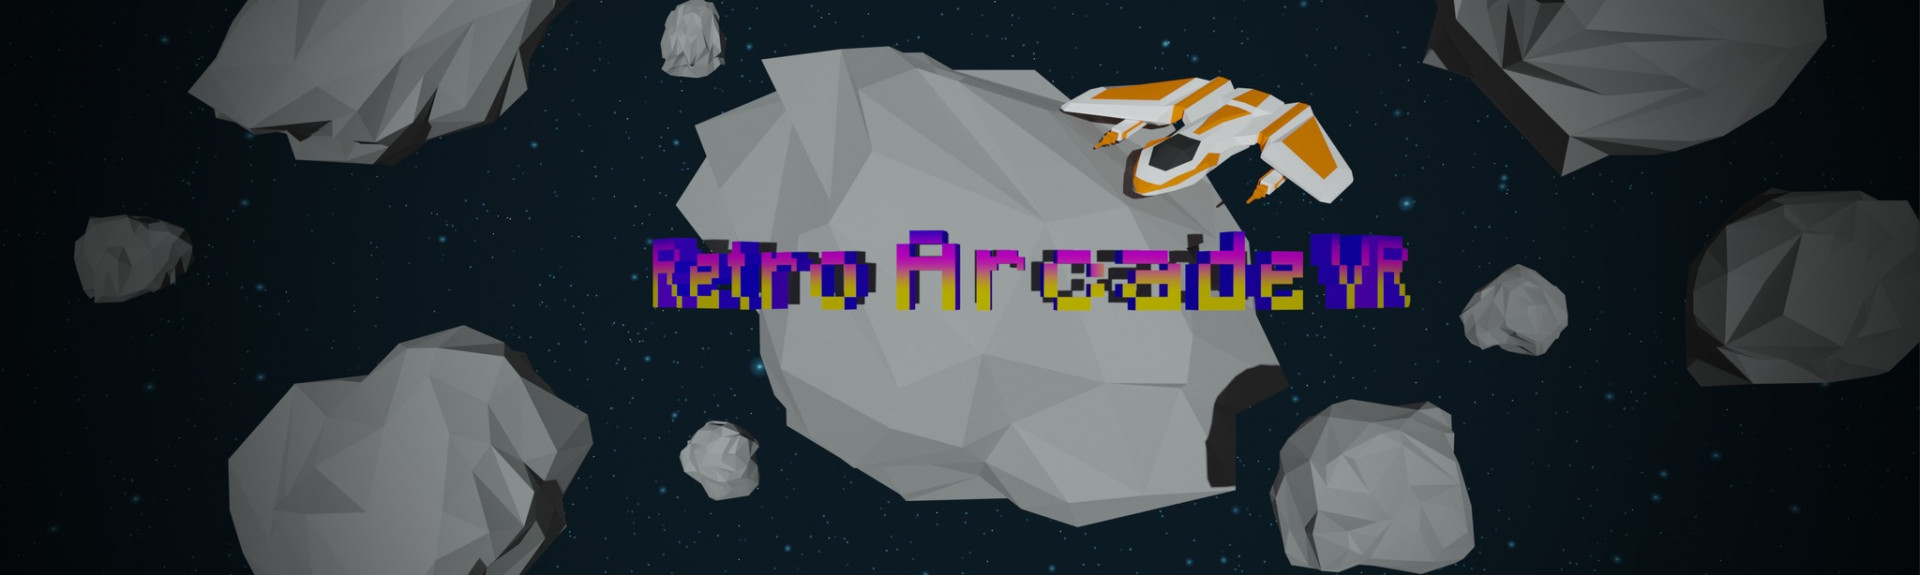 RAV: Asteroids